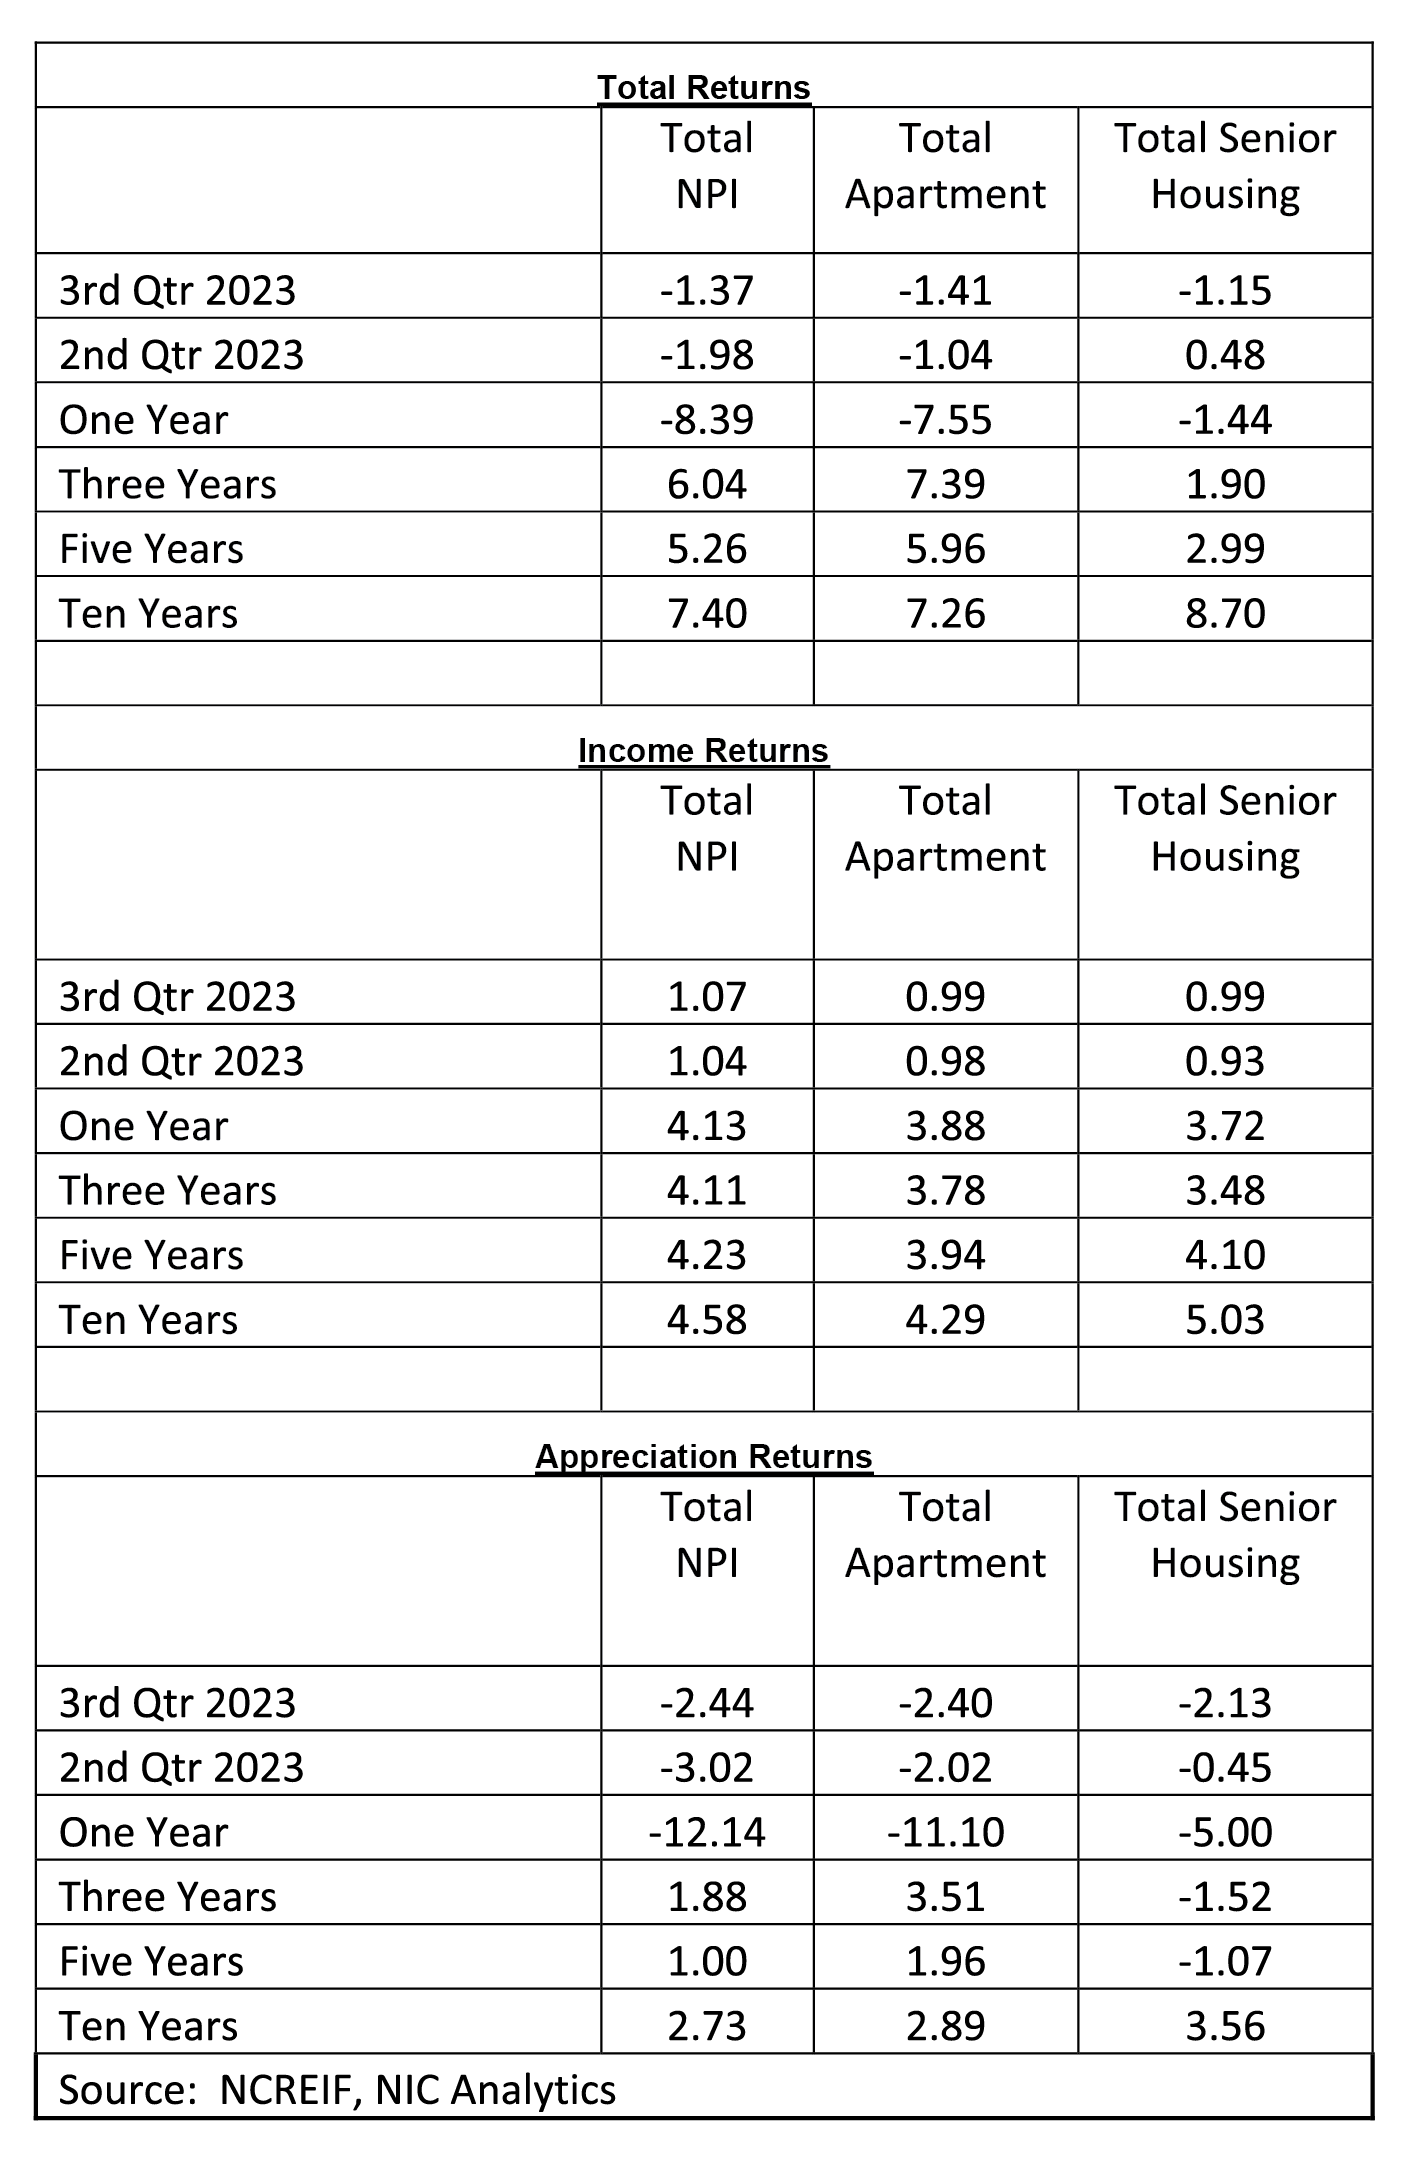 Third Quarter 2023 Senior Housing Posts Negative Total Return